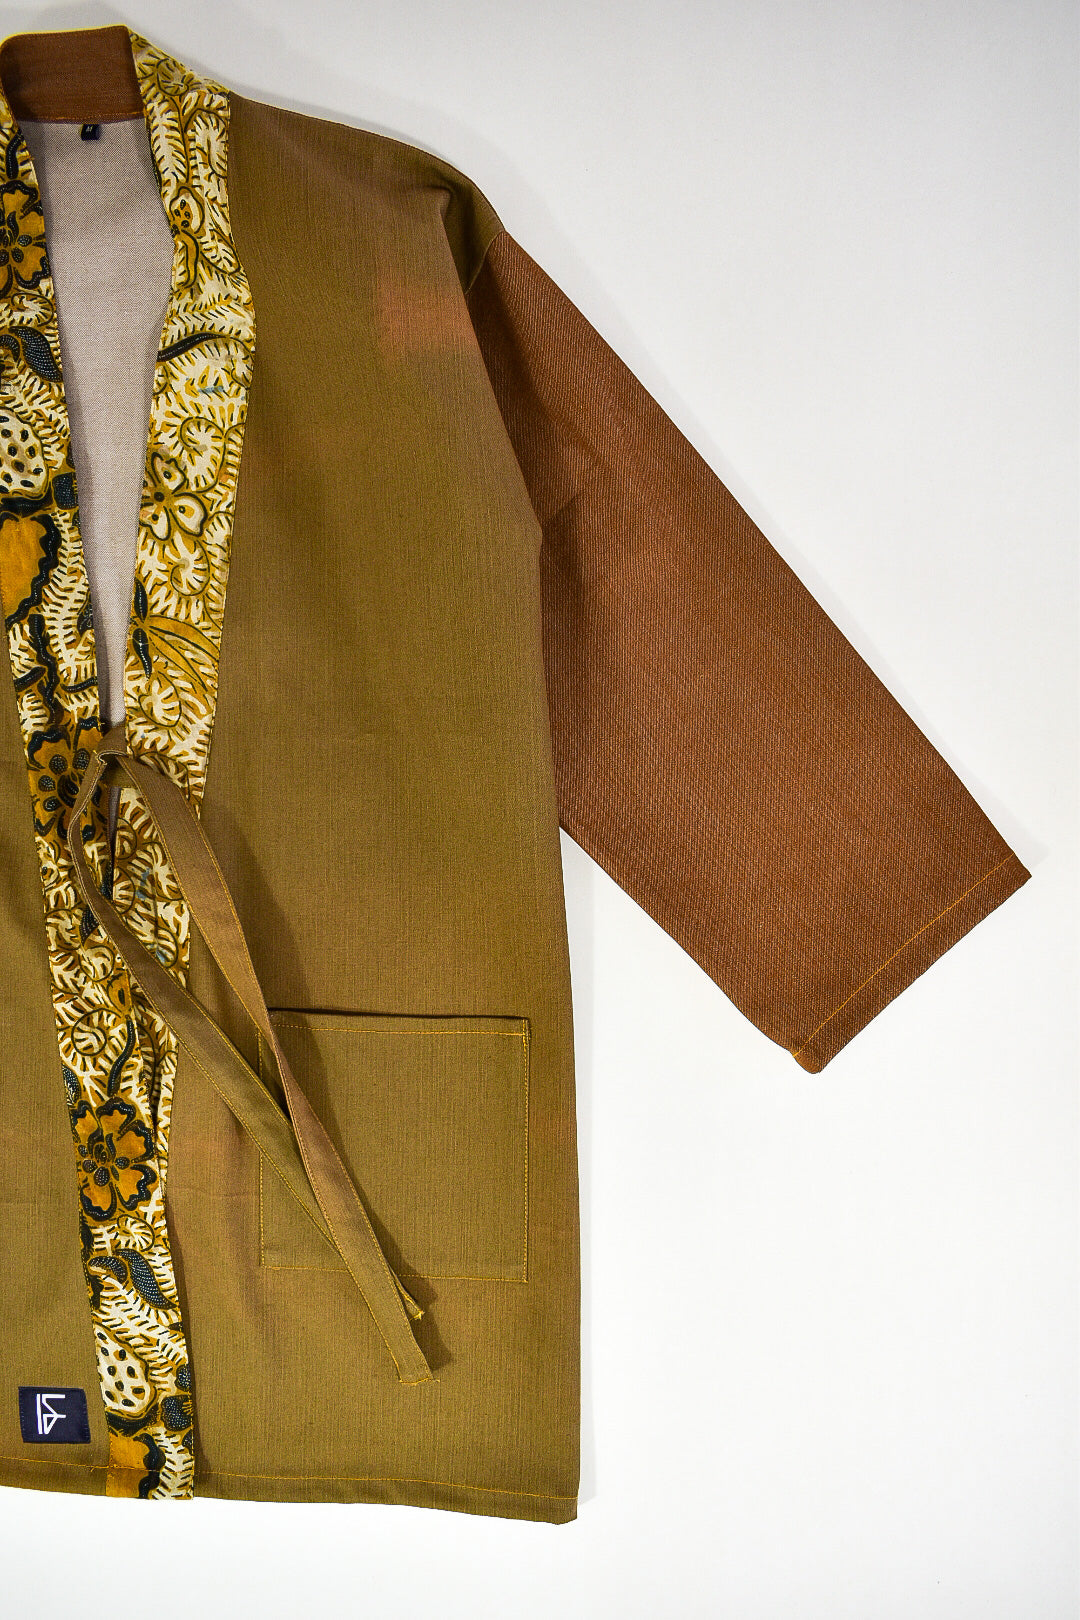 IF DENIM |  Sustainable Batik Kimono Cognac M